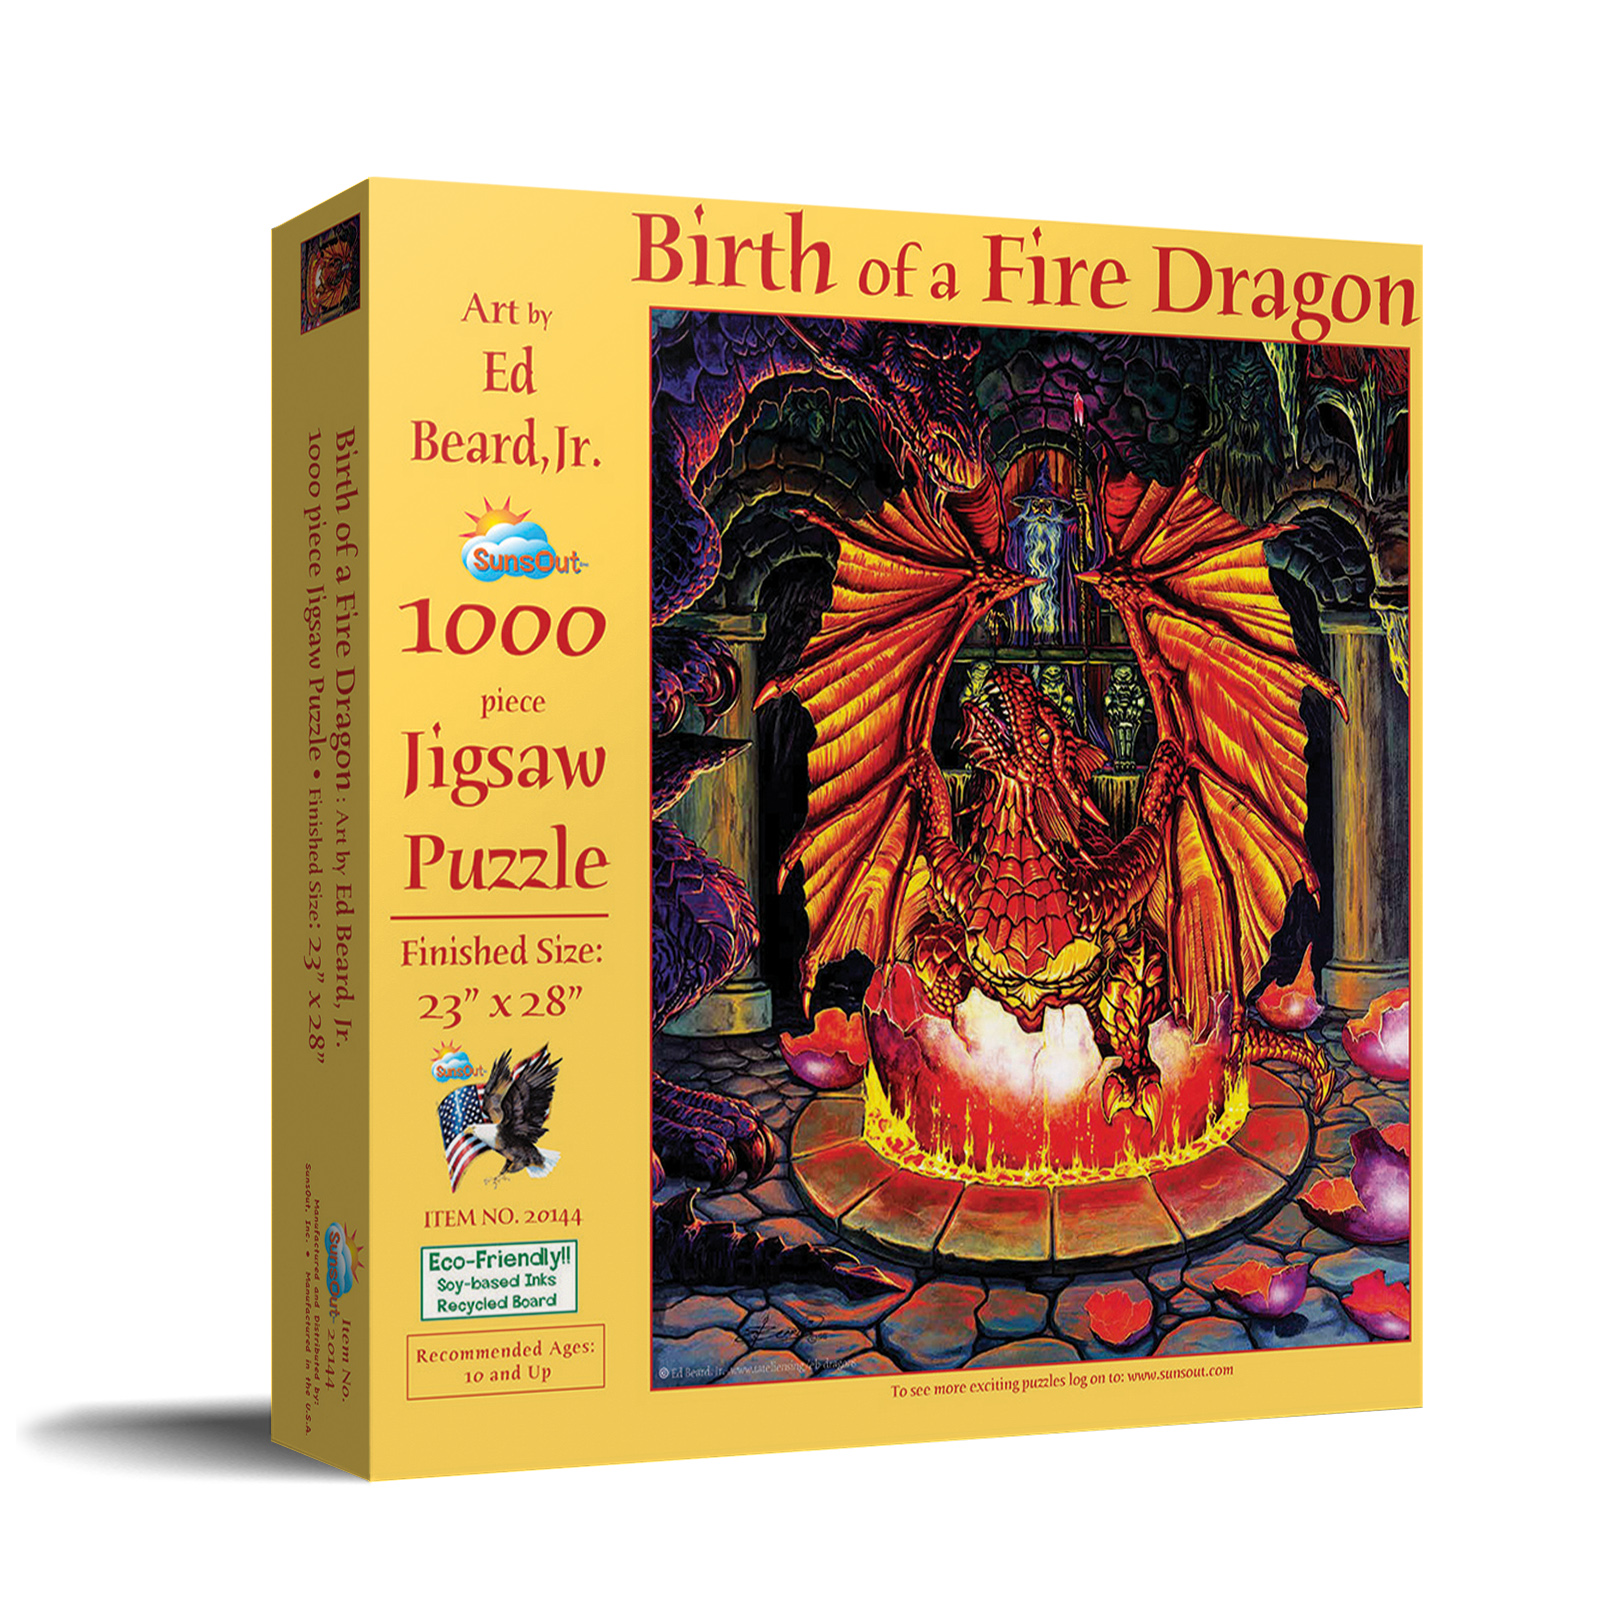 Birth of a Fire Dragon